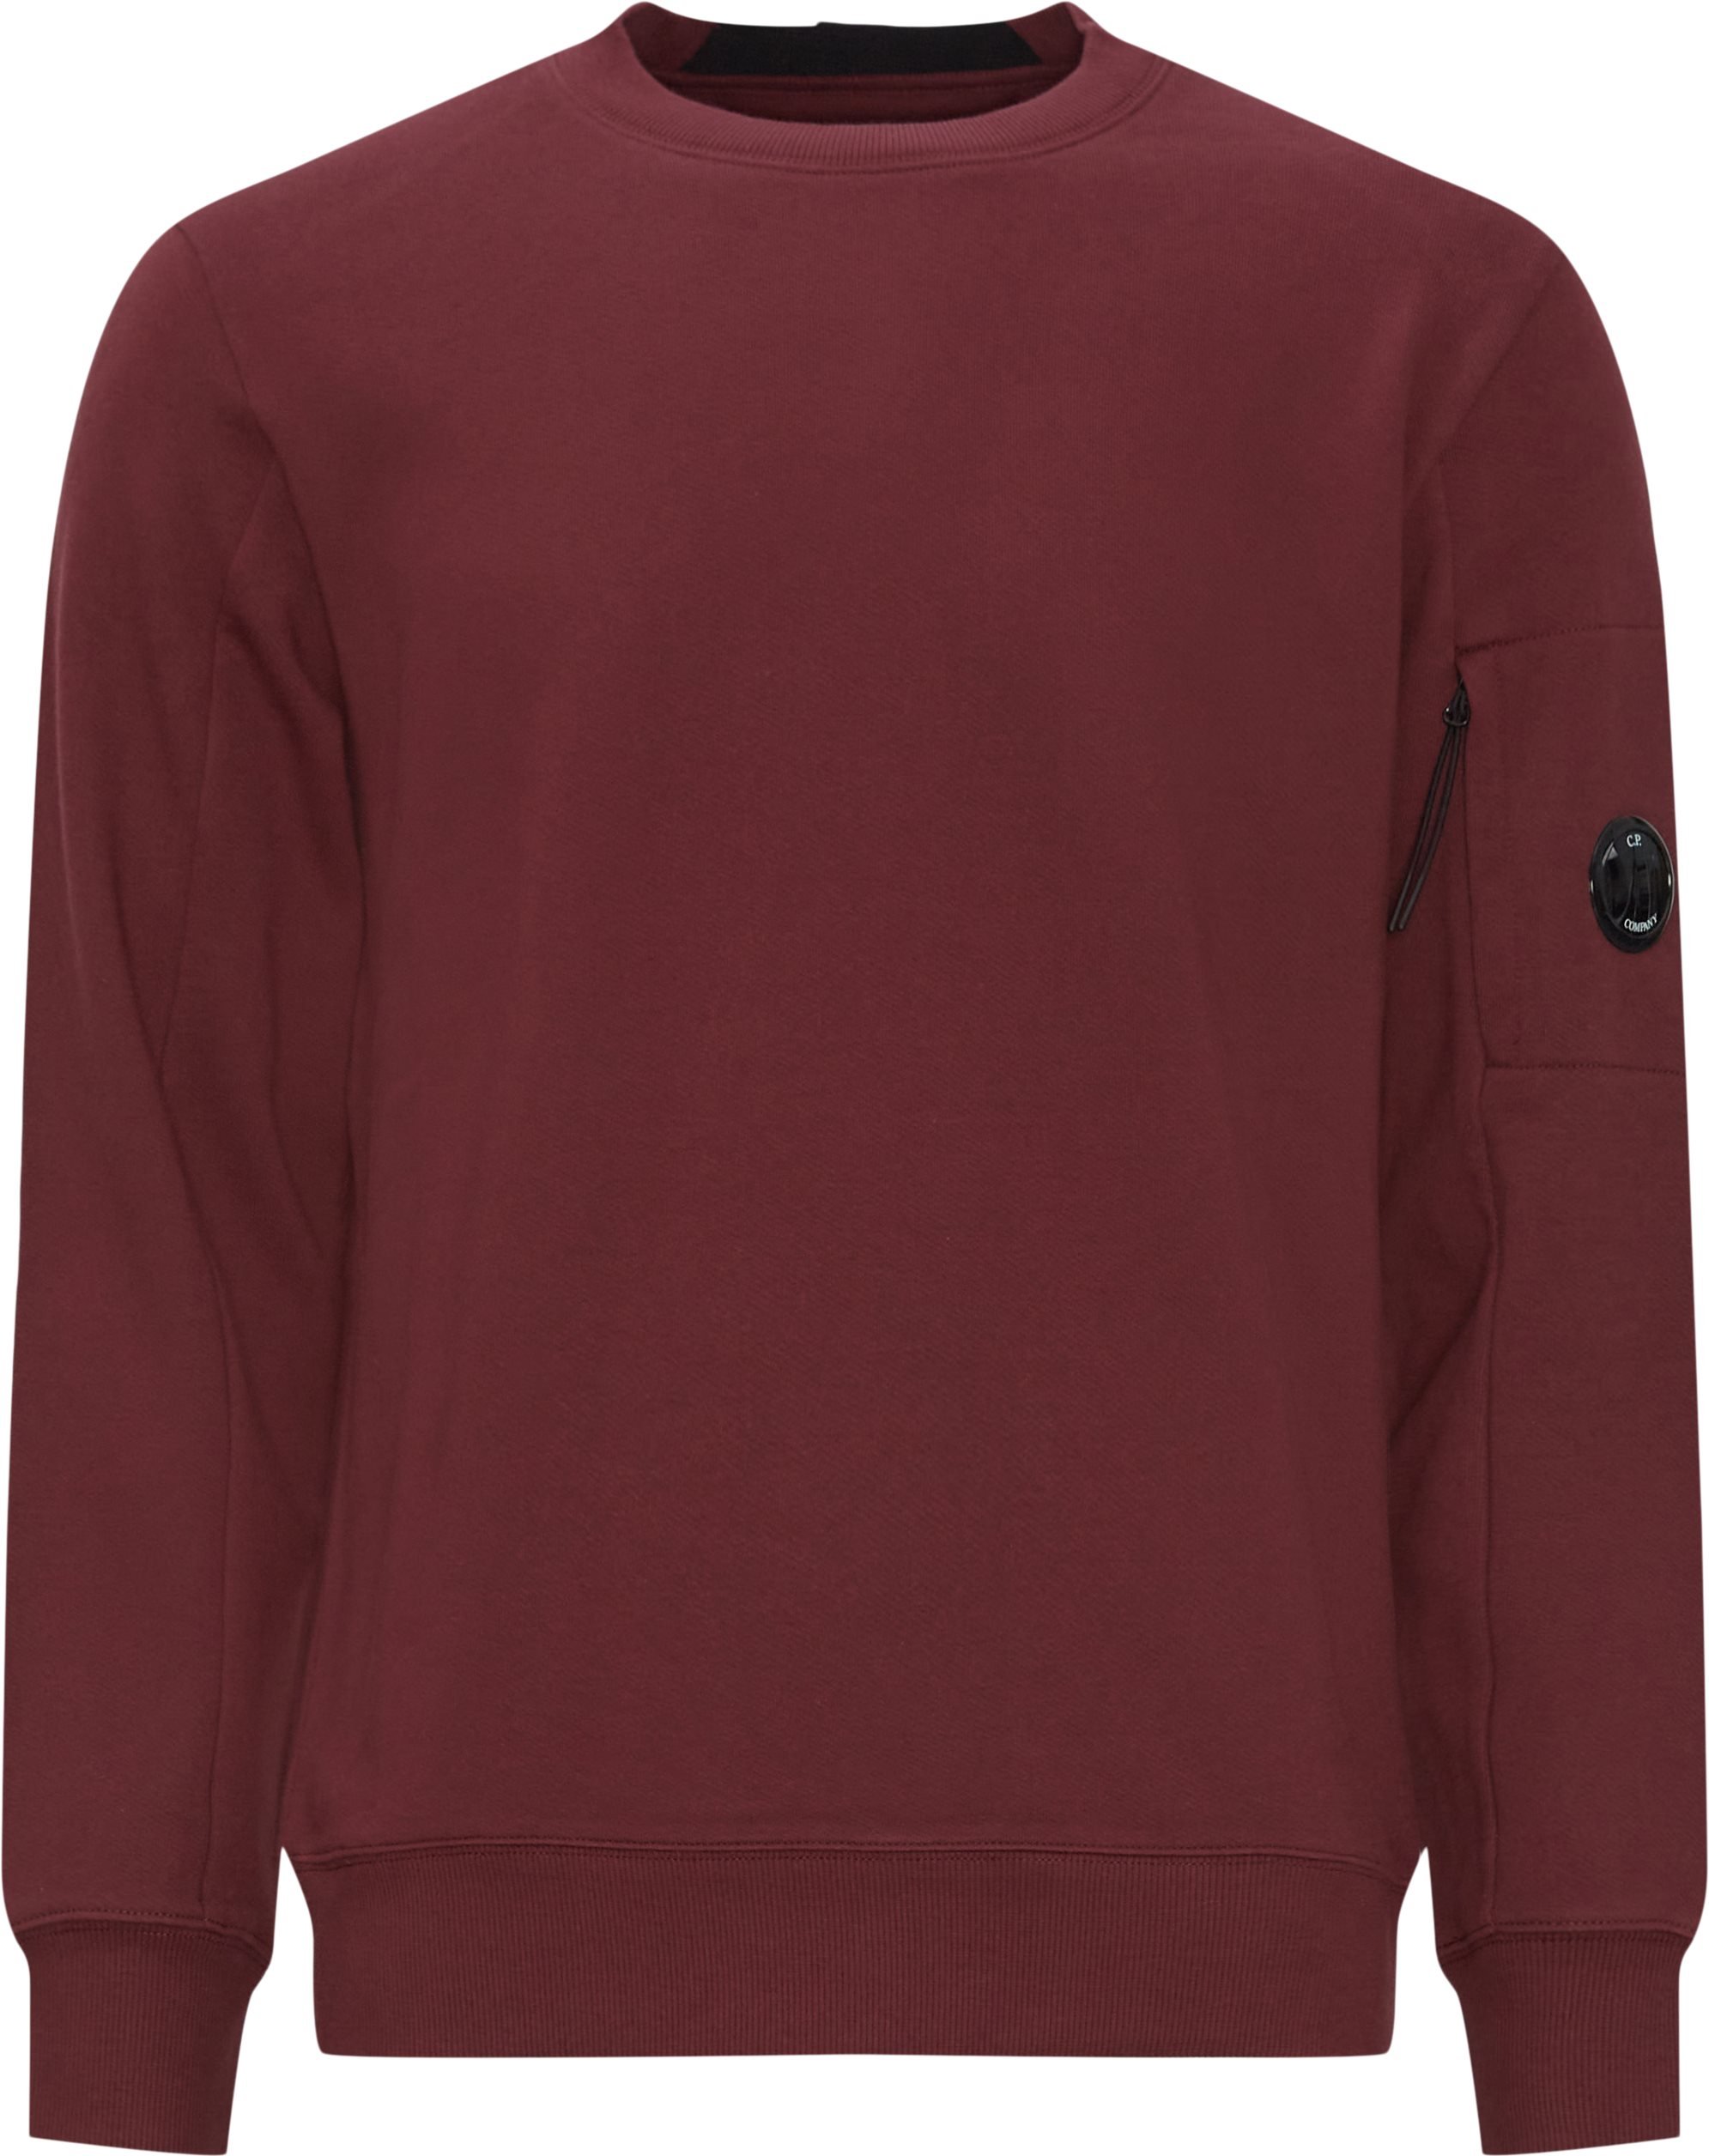 Sweatshirts - Regular fit - Bordeaux